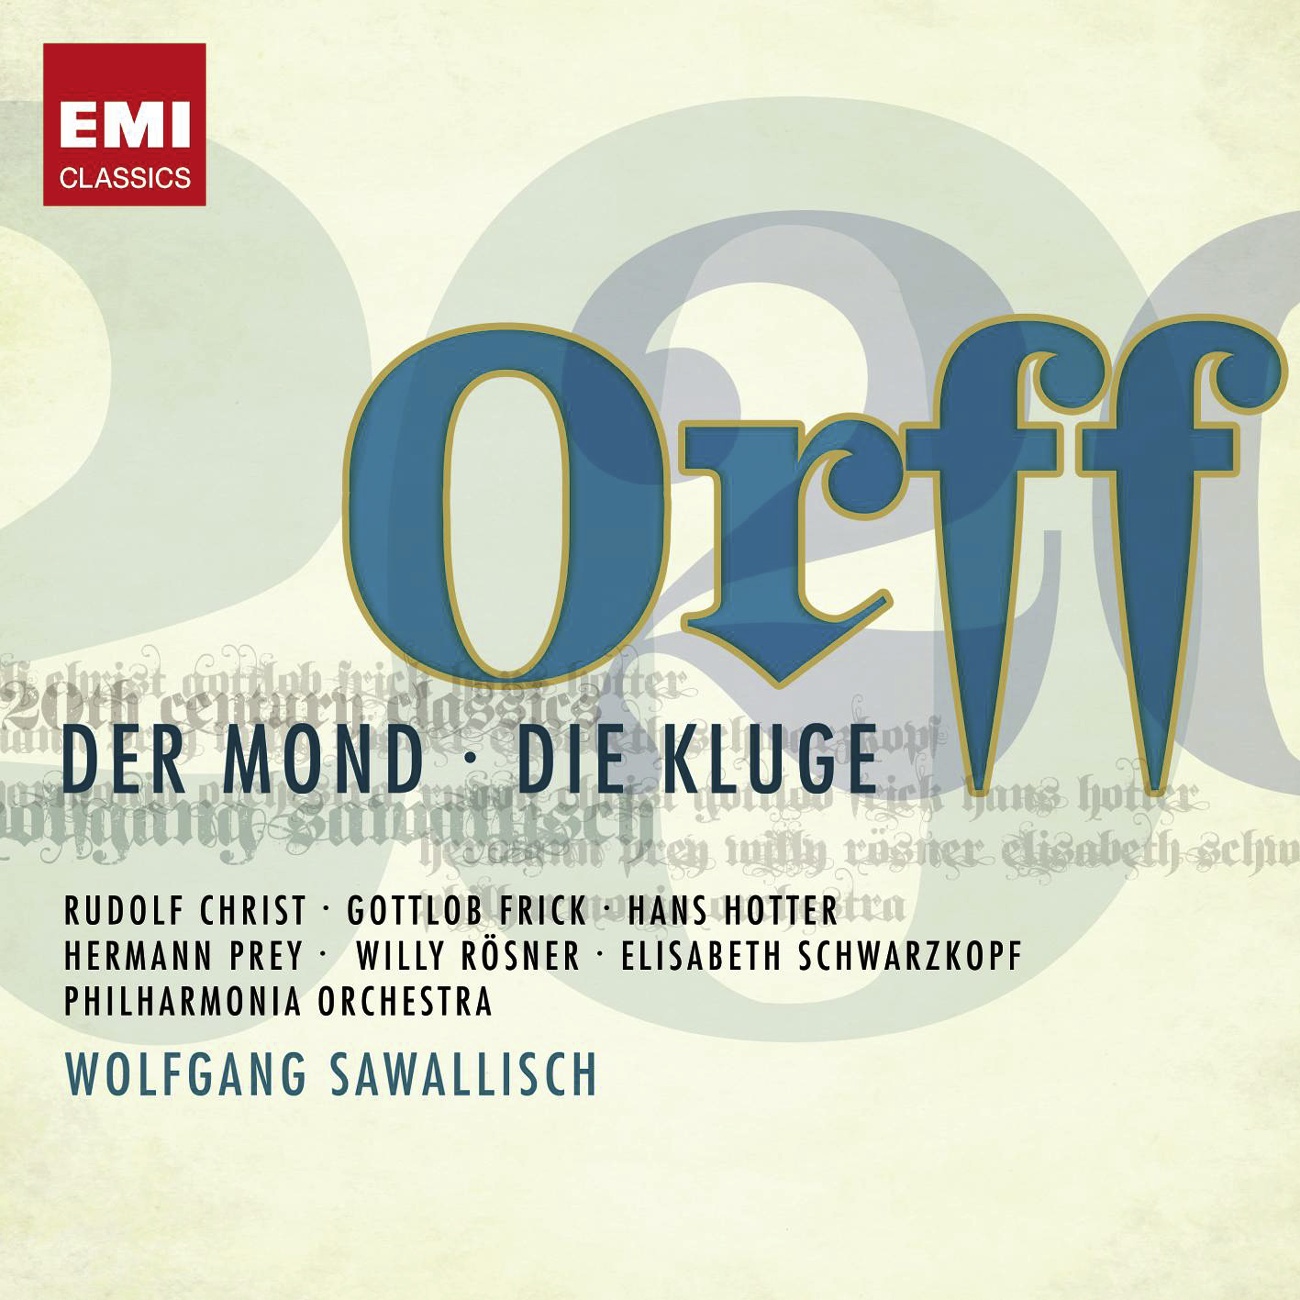 Die Kluge (1998 Digital Remaster), Scene 3: Nenn mir die Rätsel, König (Kluge/König)